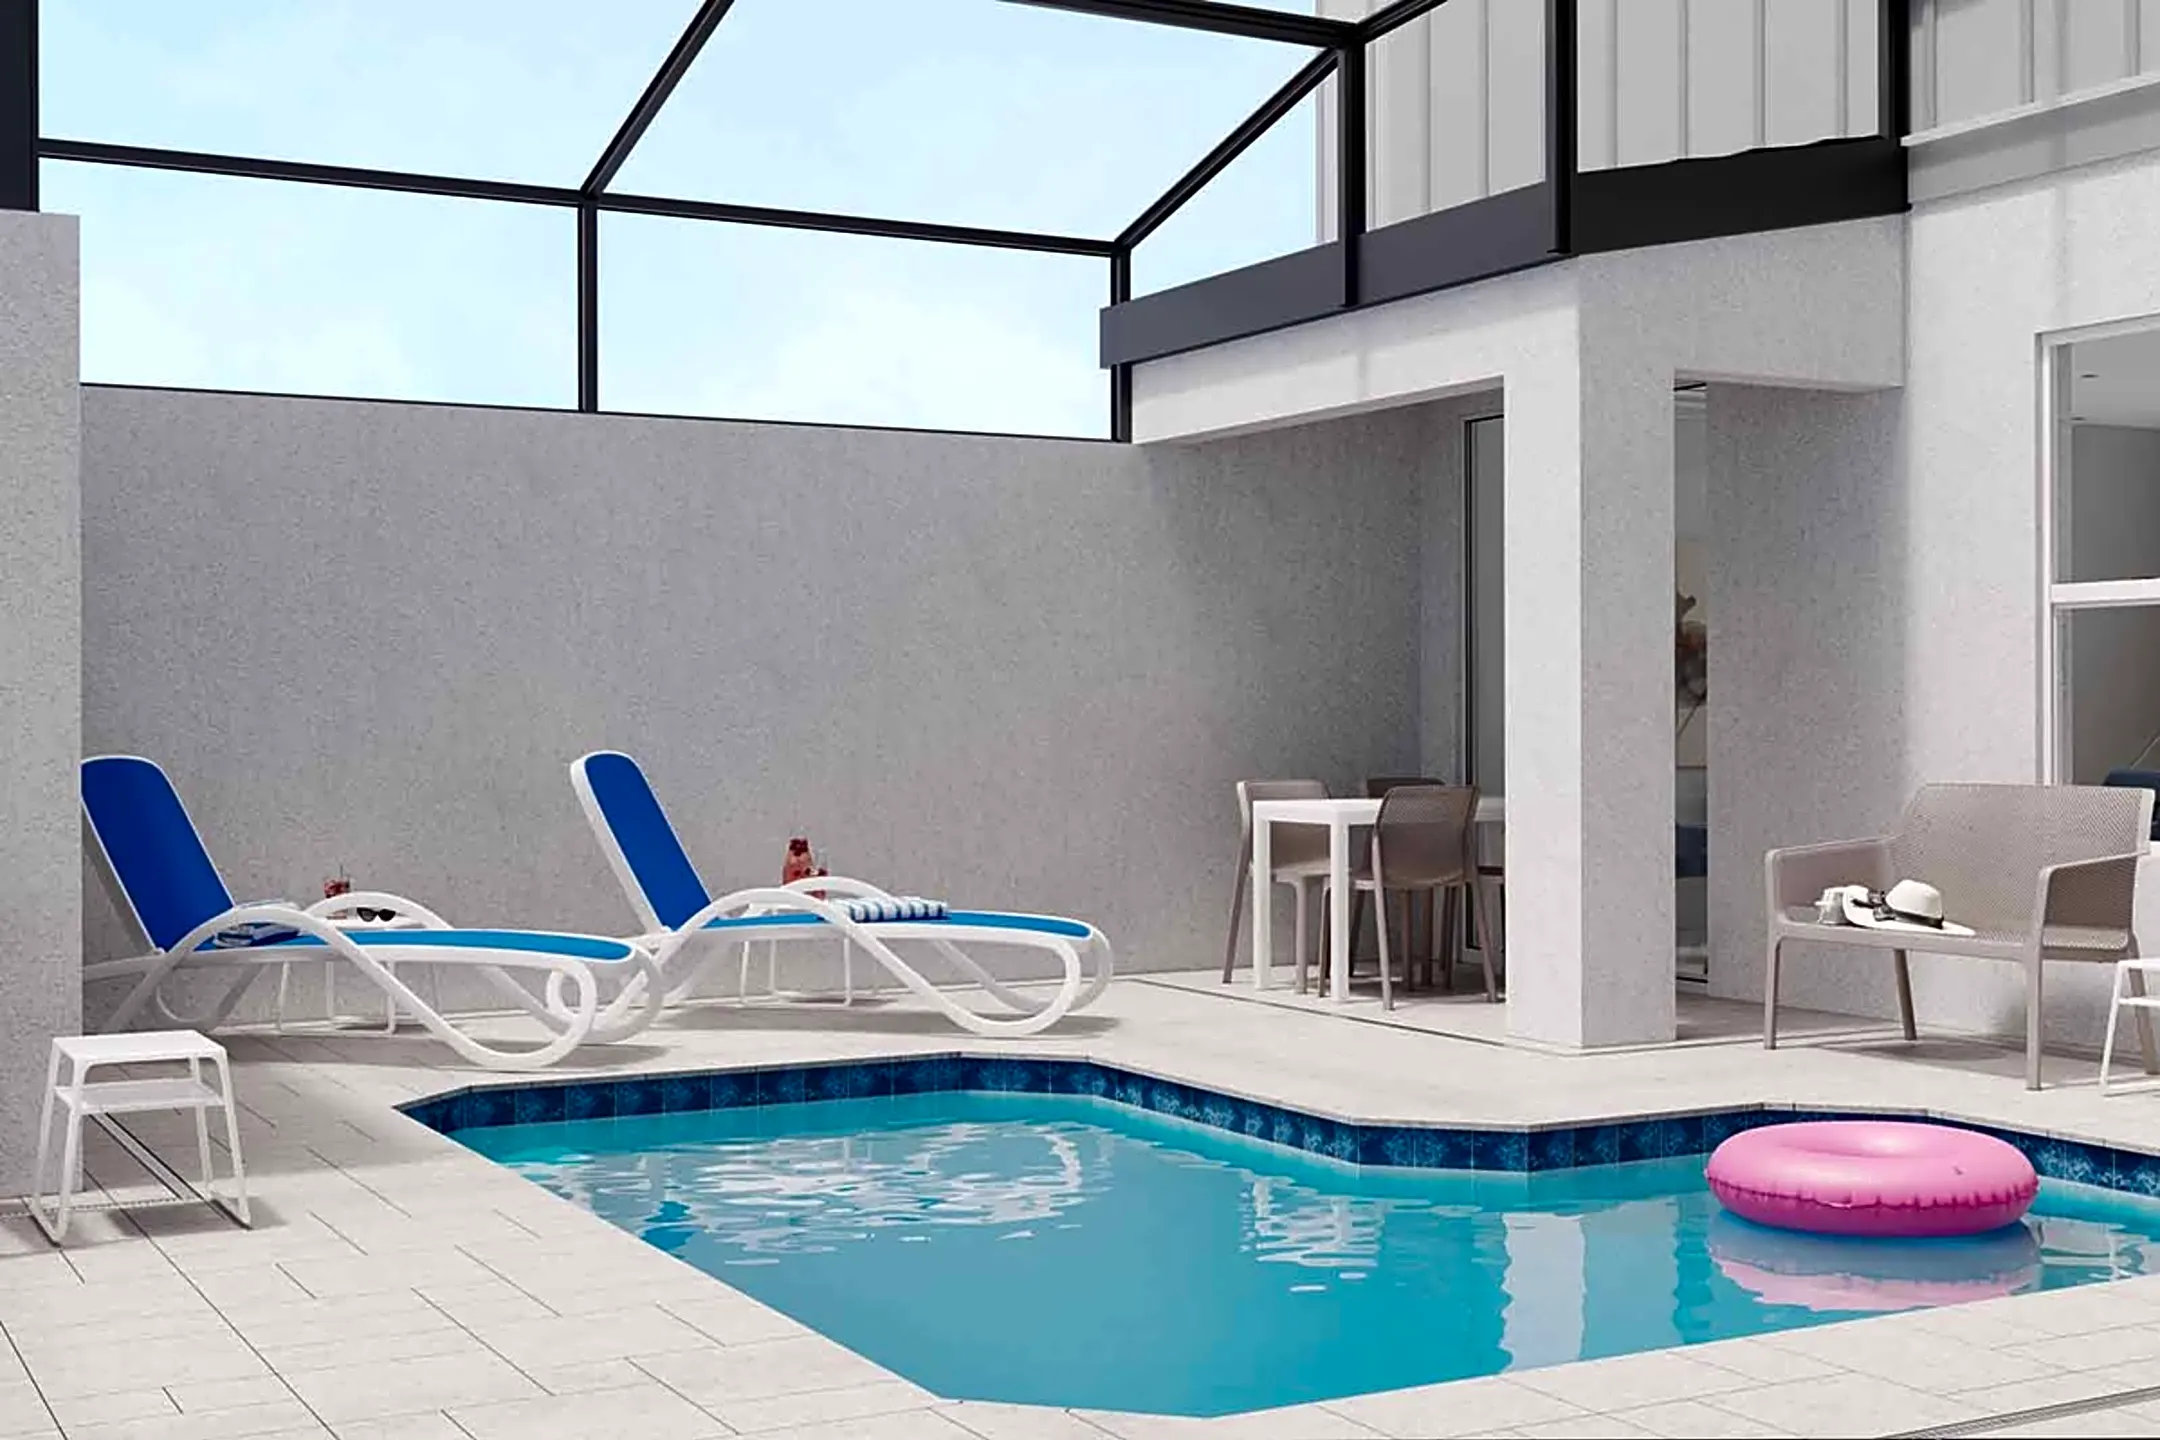 Pool - Villatel Orlando Resort - Orlando, FL